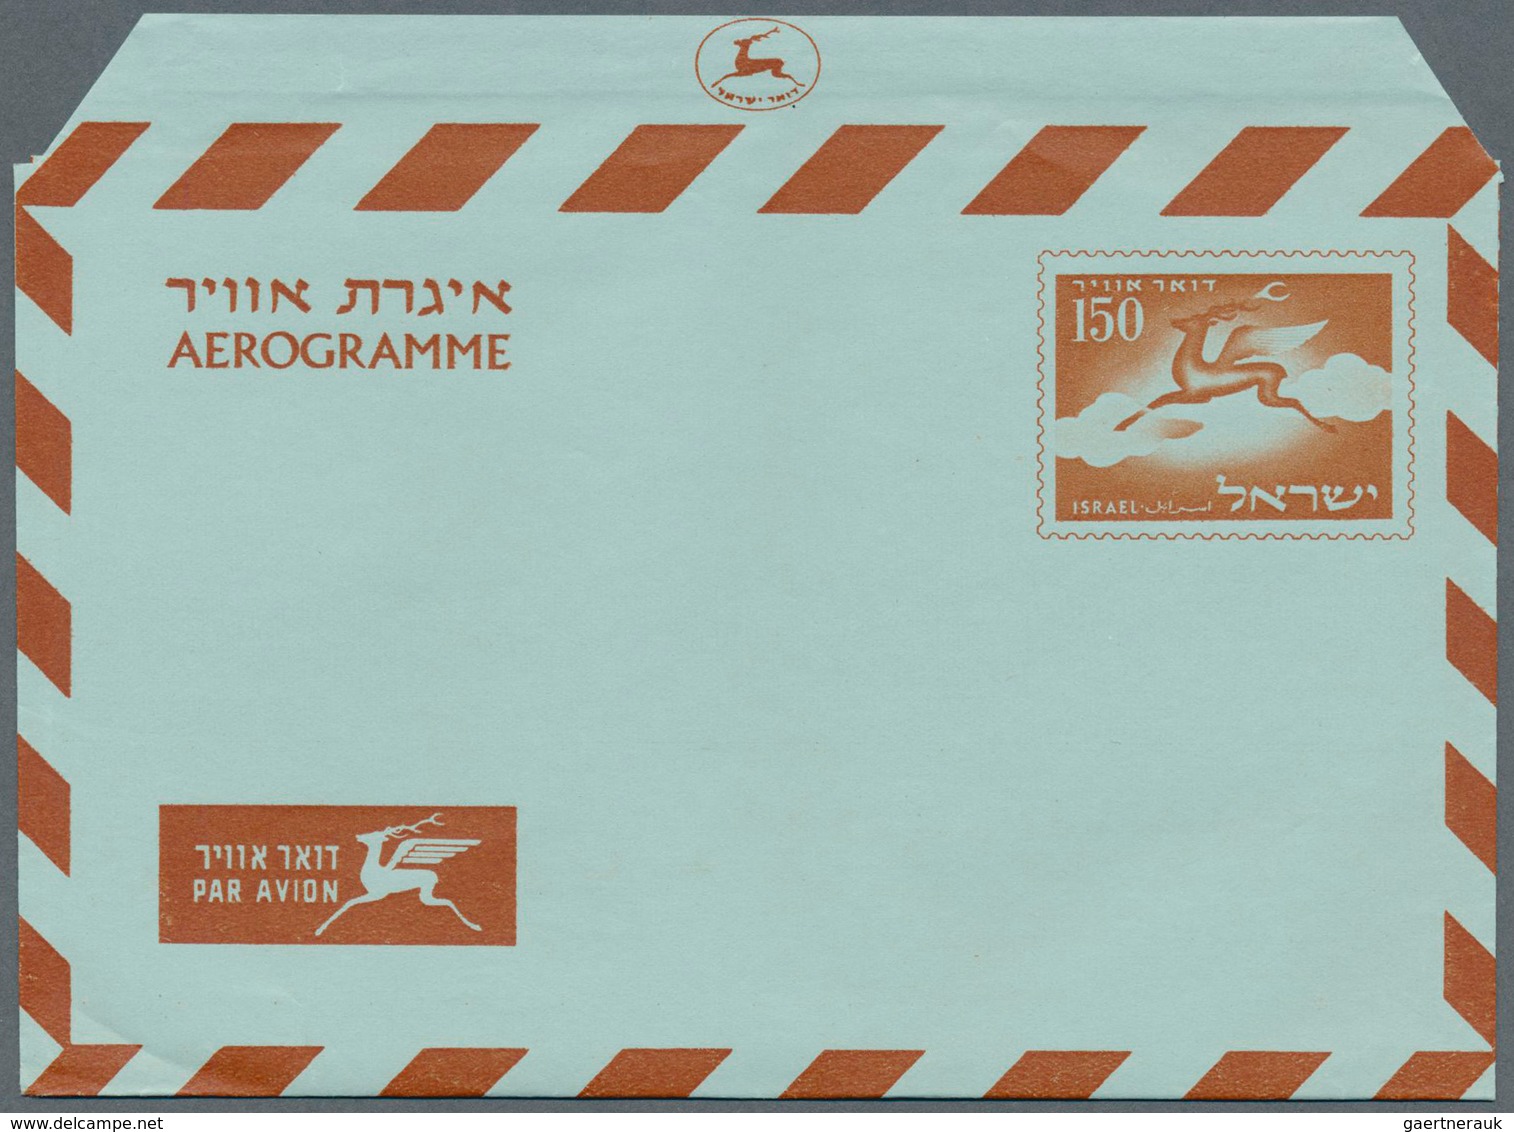 Israel: 1952/1998 (ca.), AEROGRAMMES: accumulation with more than 1.100 unused and CTO aerogrammes w